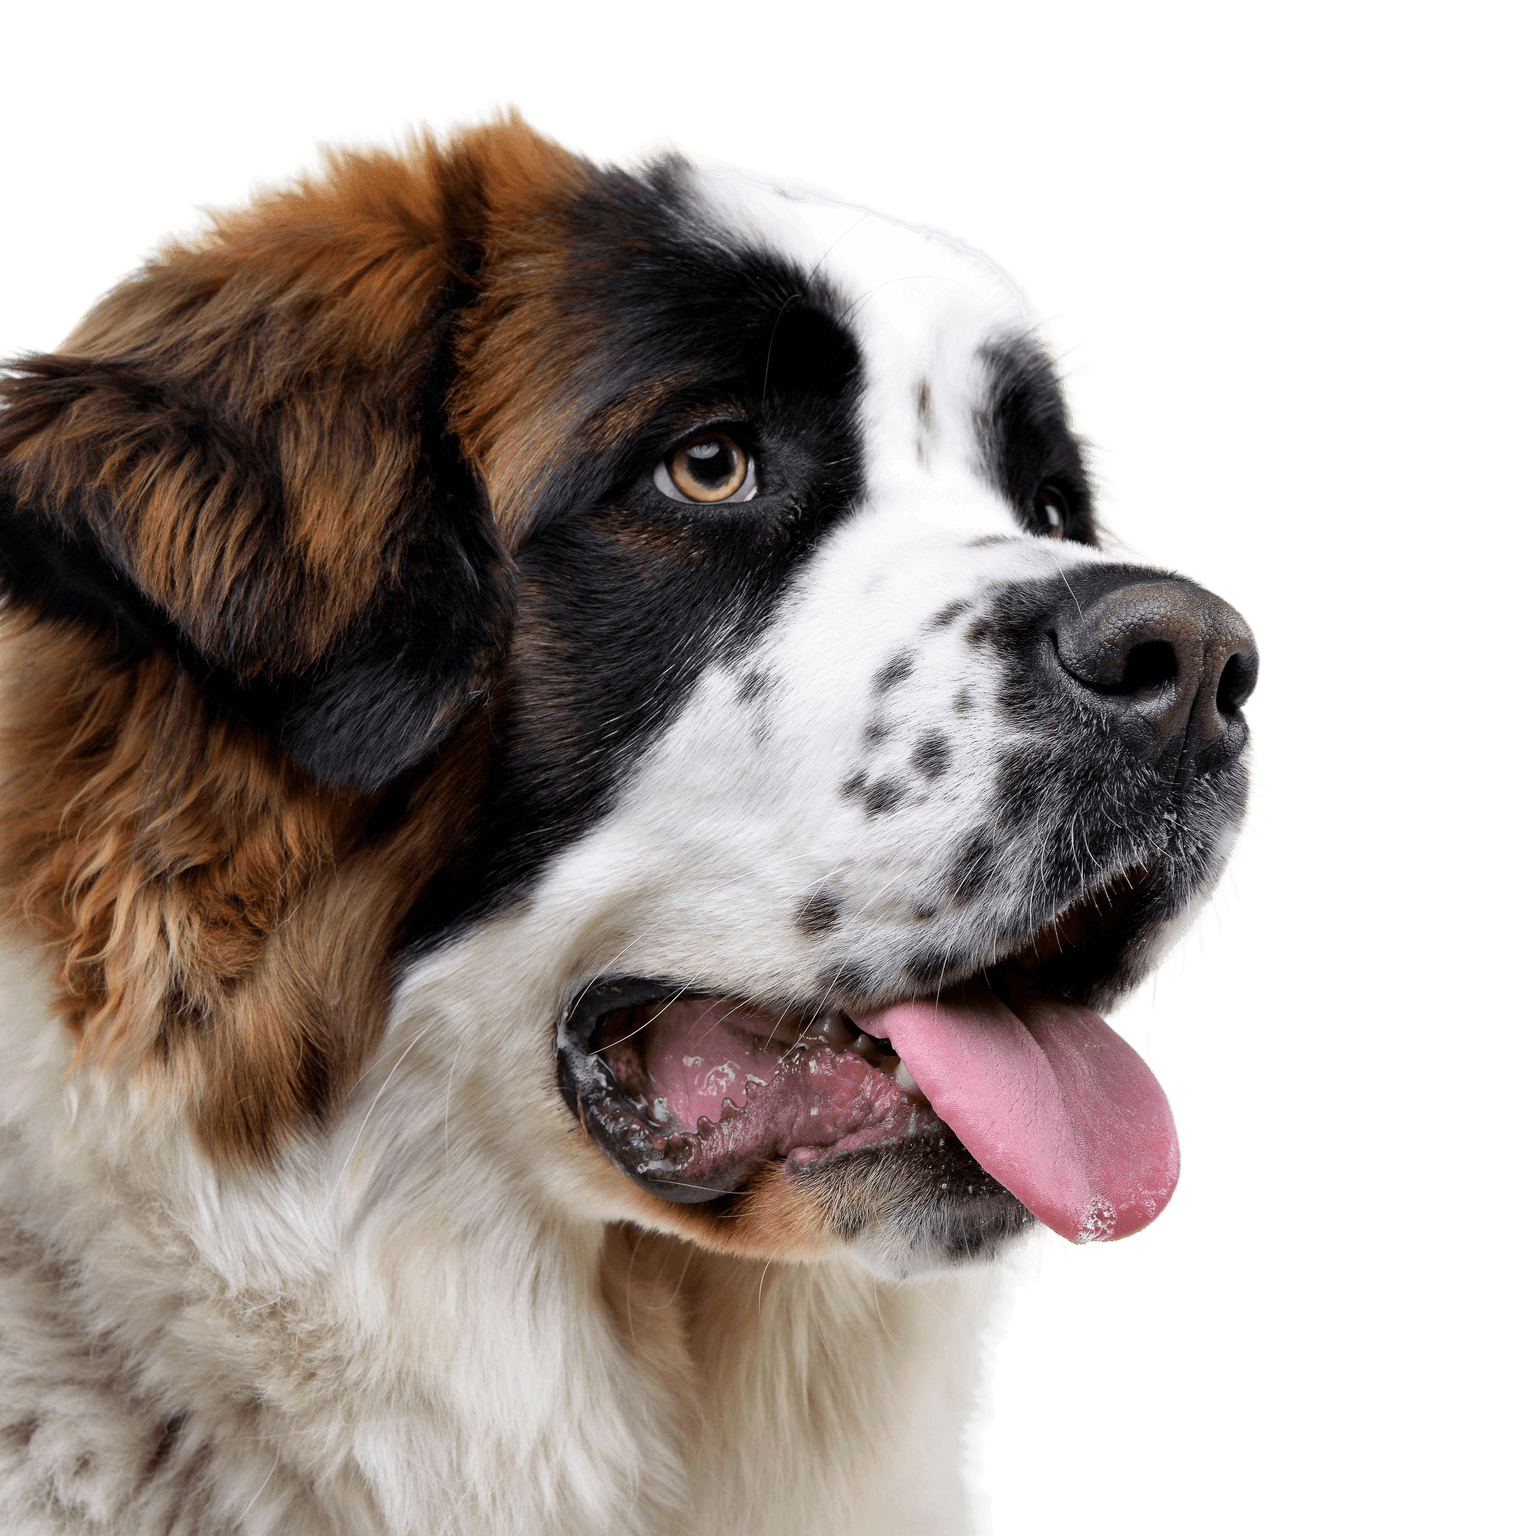 Moscow guard dog temperament and breed description